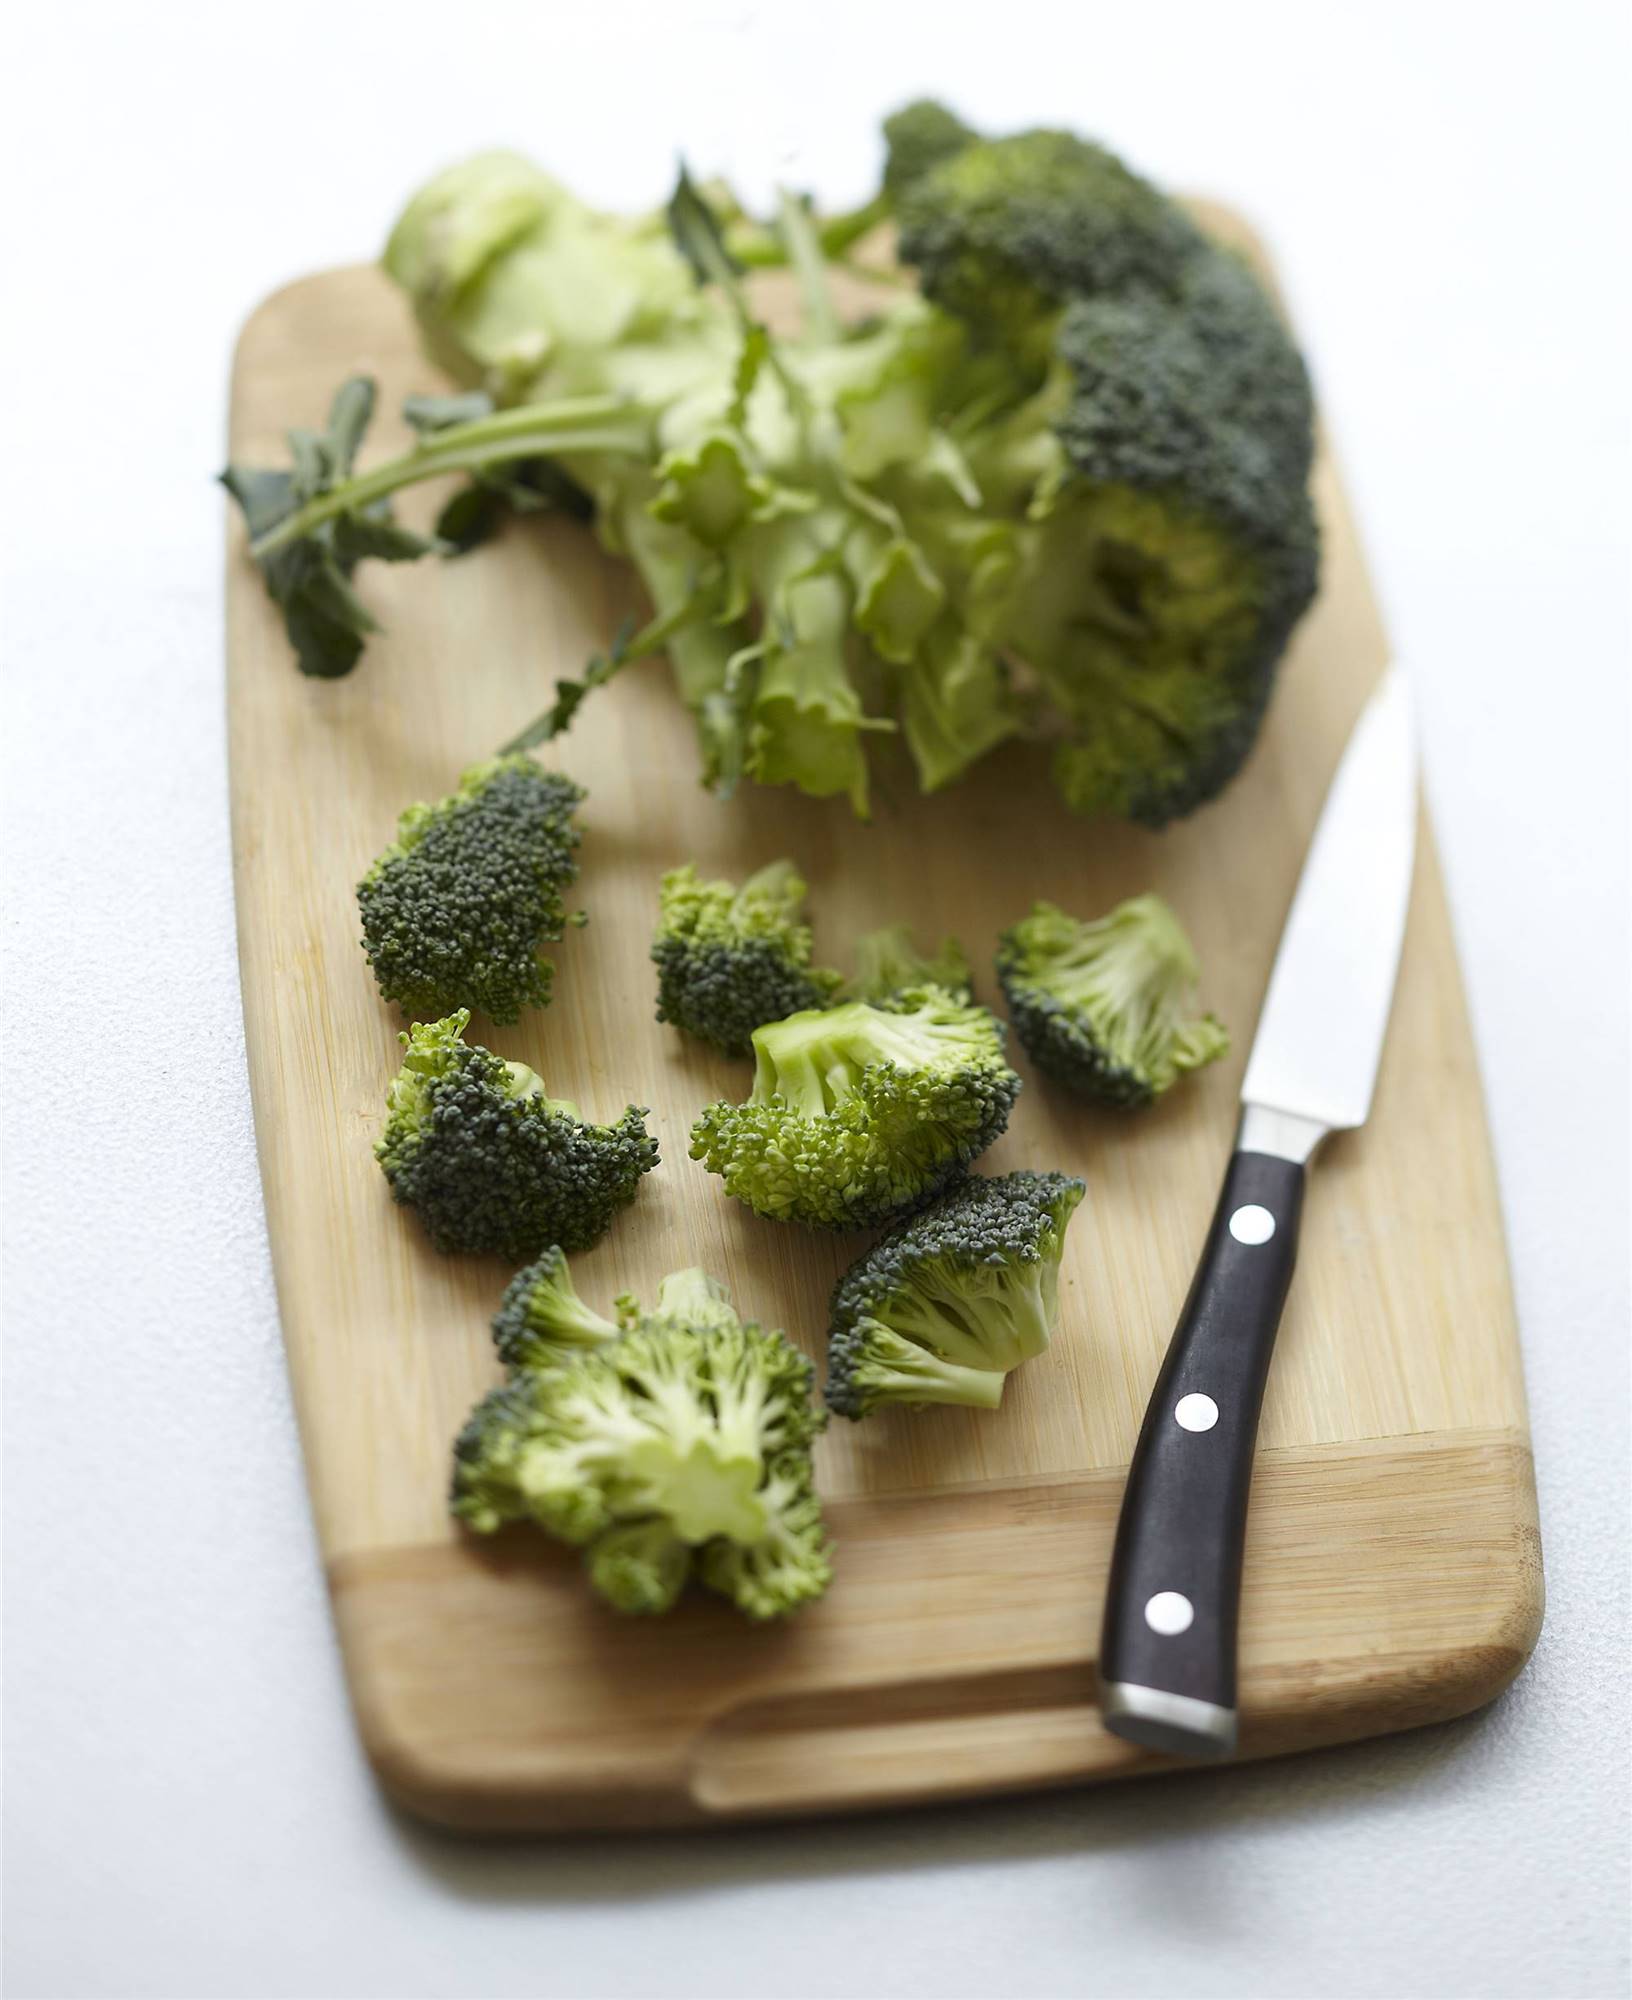 3. El brócoli es una crucífera muy recomendable